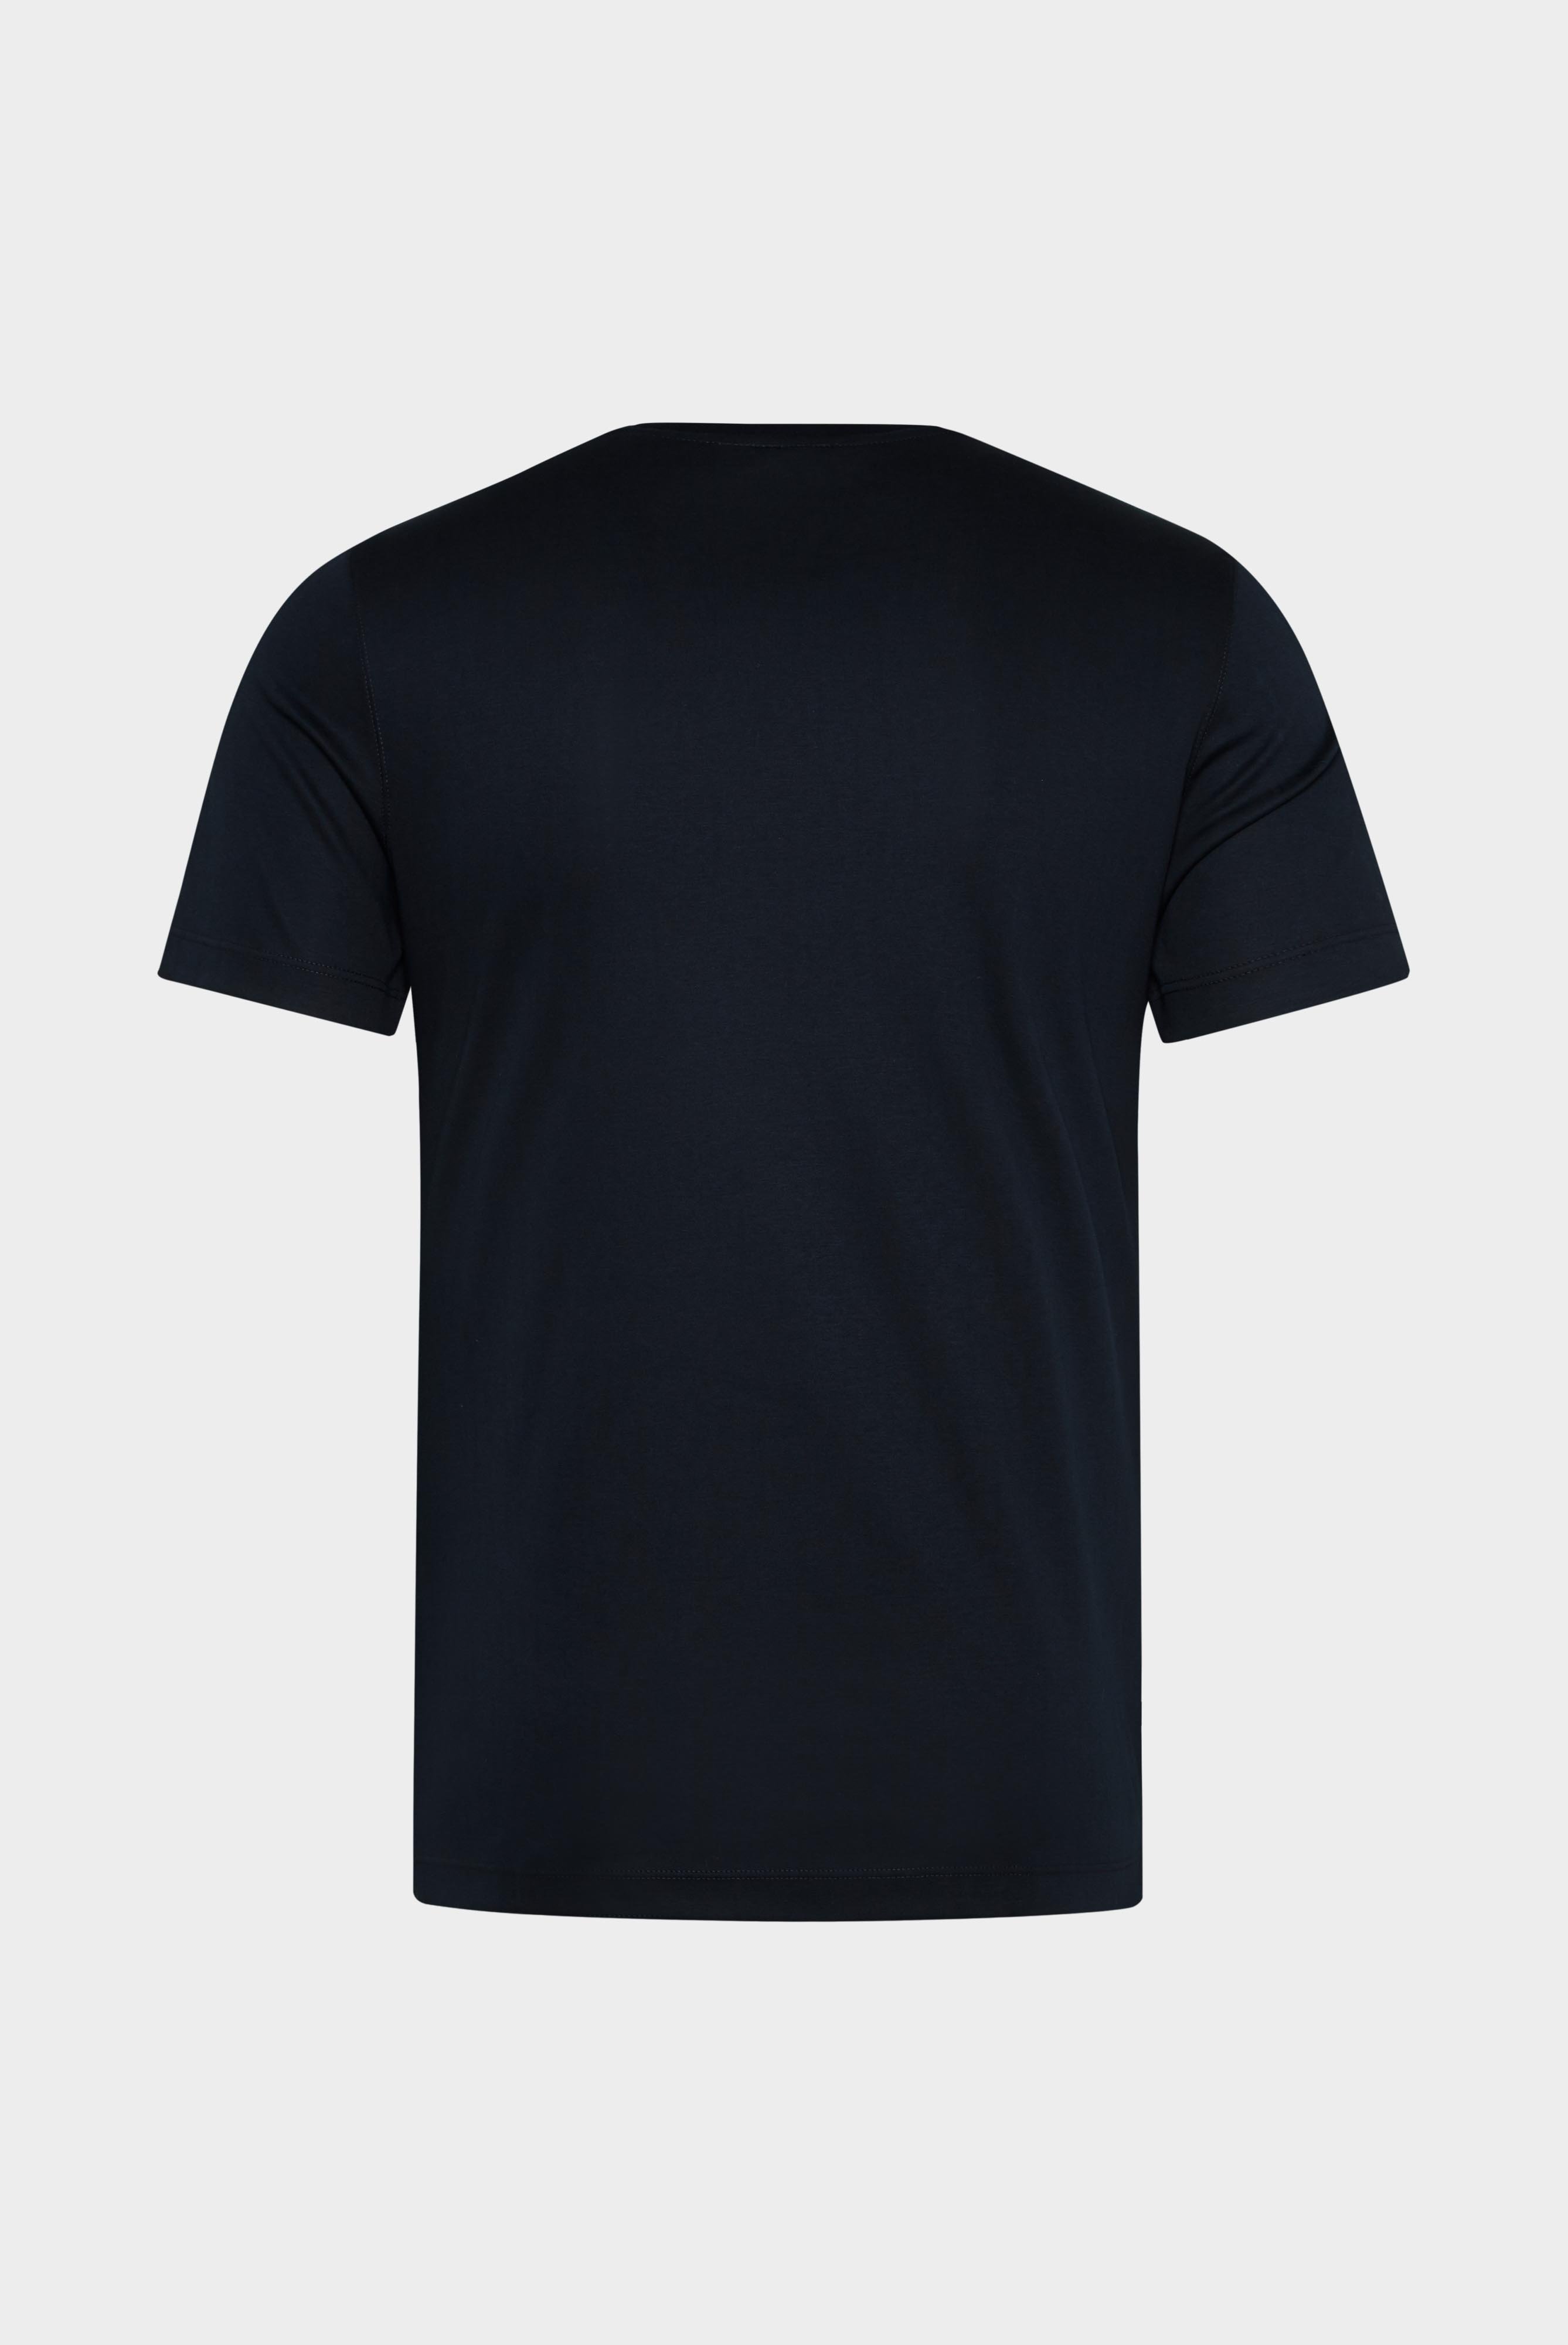 T-Shirts+Swiss Cotton Jersey Crew Neck T-Shirt+20.1717.UX.180031.790.XXL